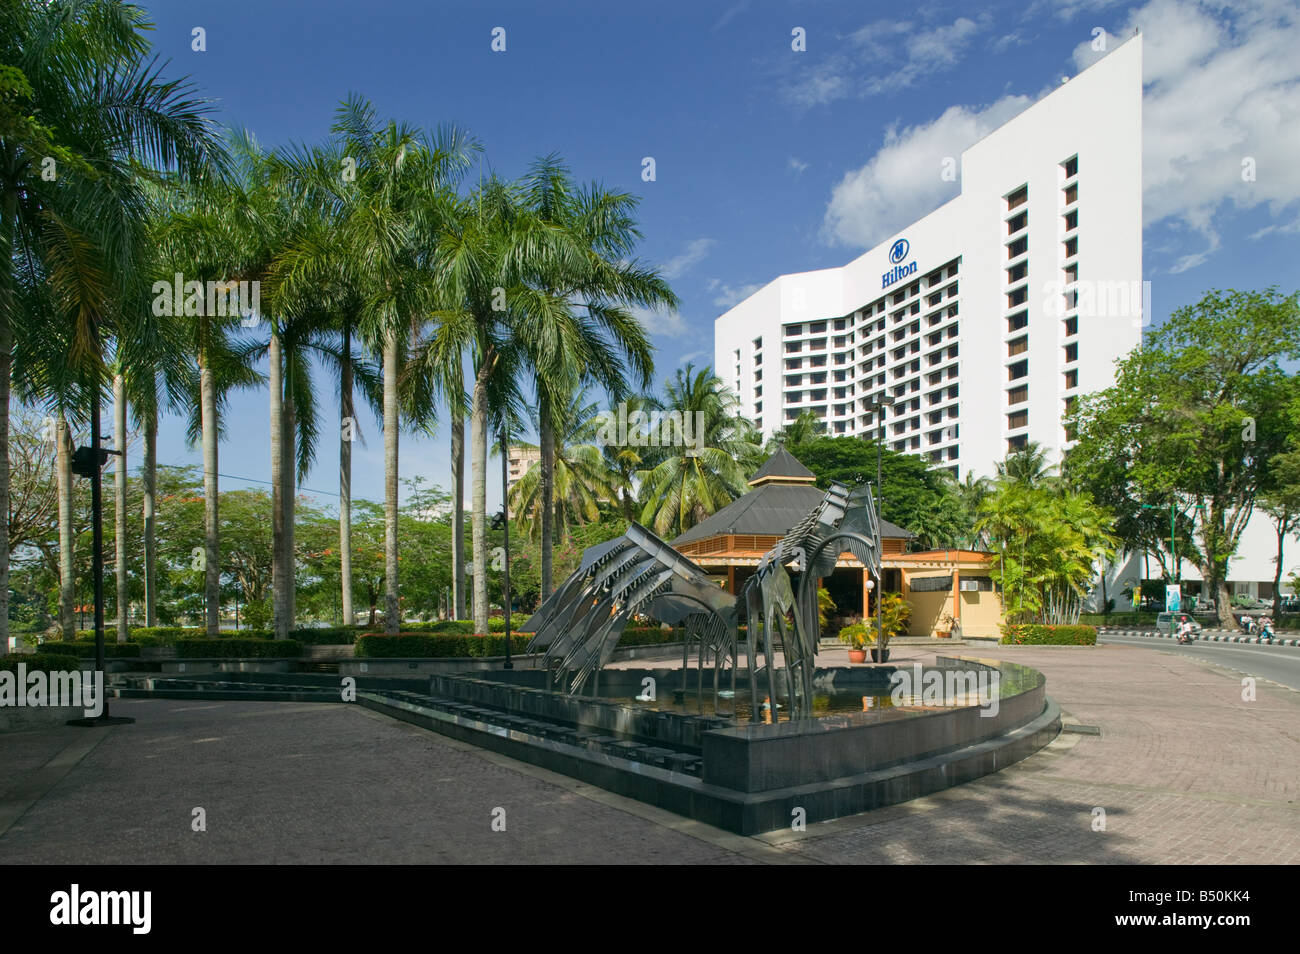 Hilton Hotel in central Kuching Sarawak Malaysia Stock Photo